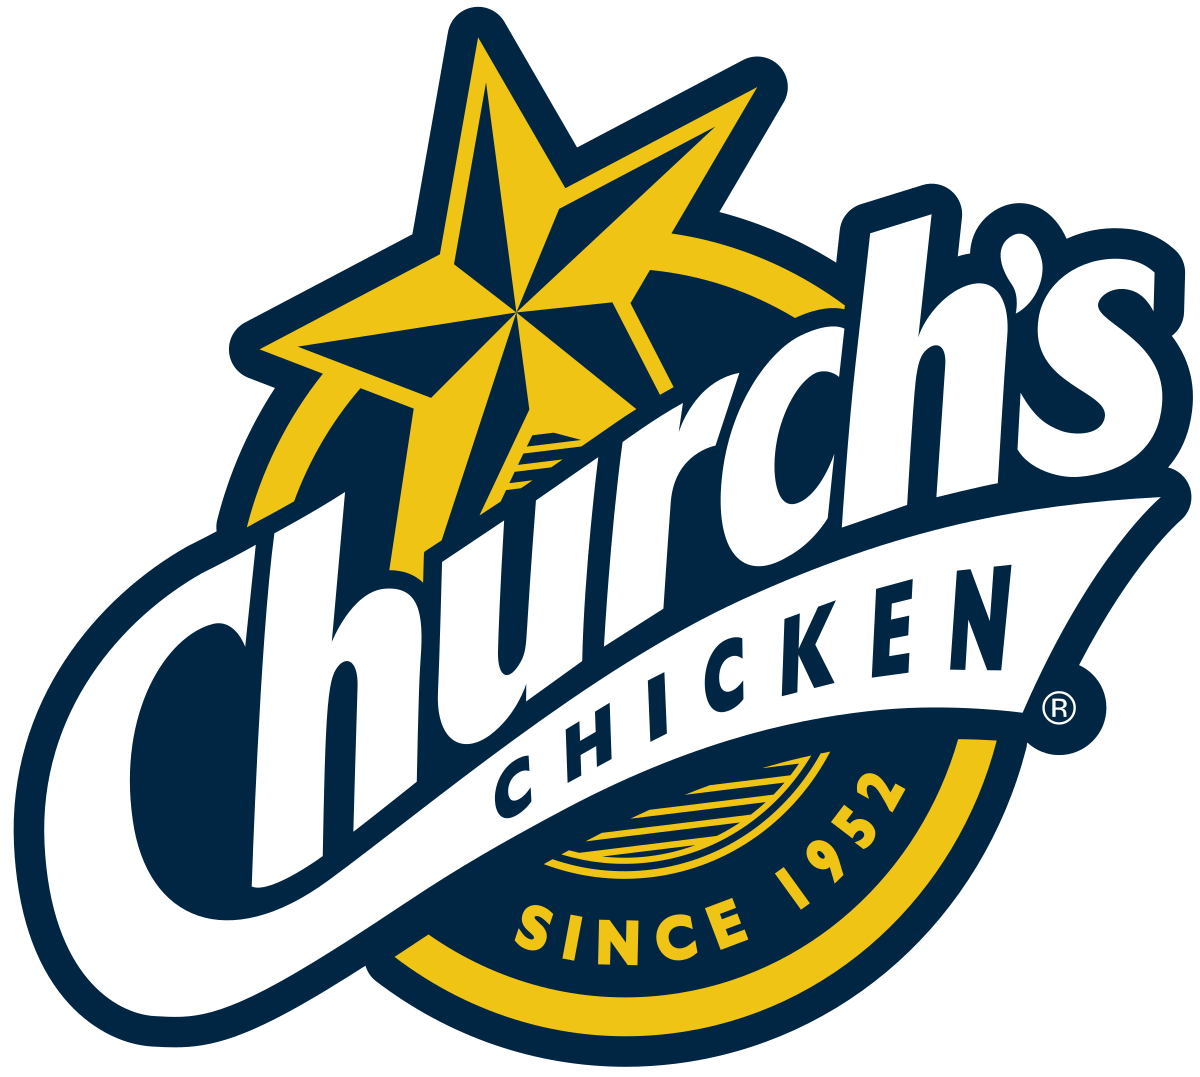 https://activemenus.com/wp-content/uploads/2021/10/1200px-Churchs_Chicken_logo.svg.png